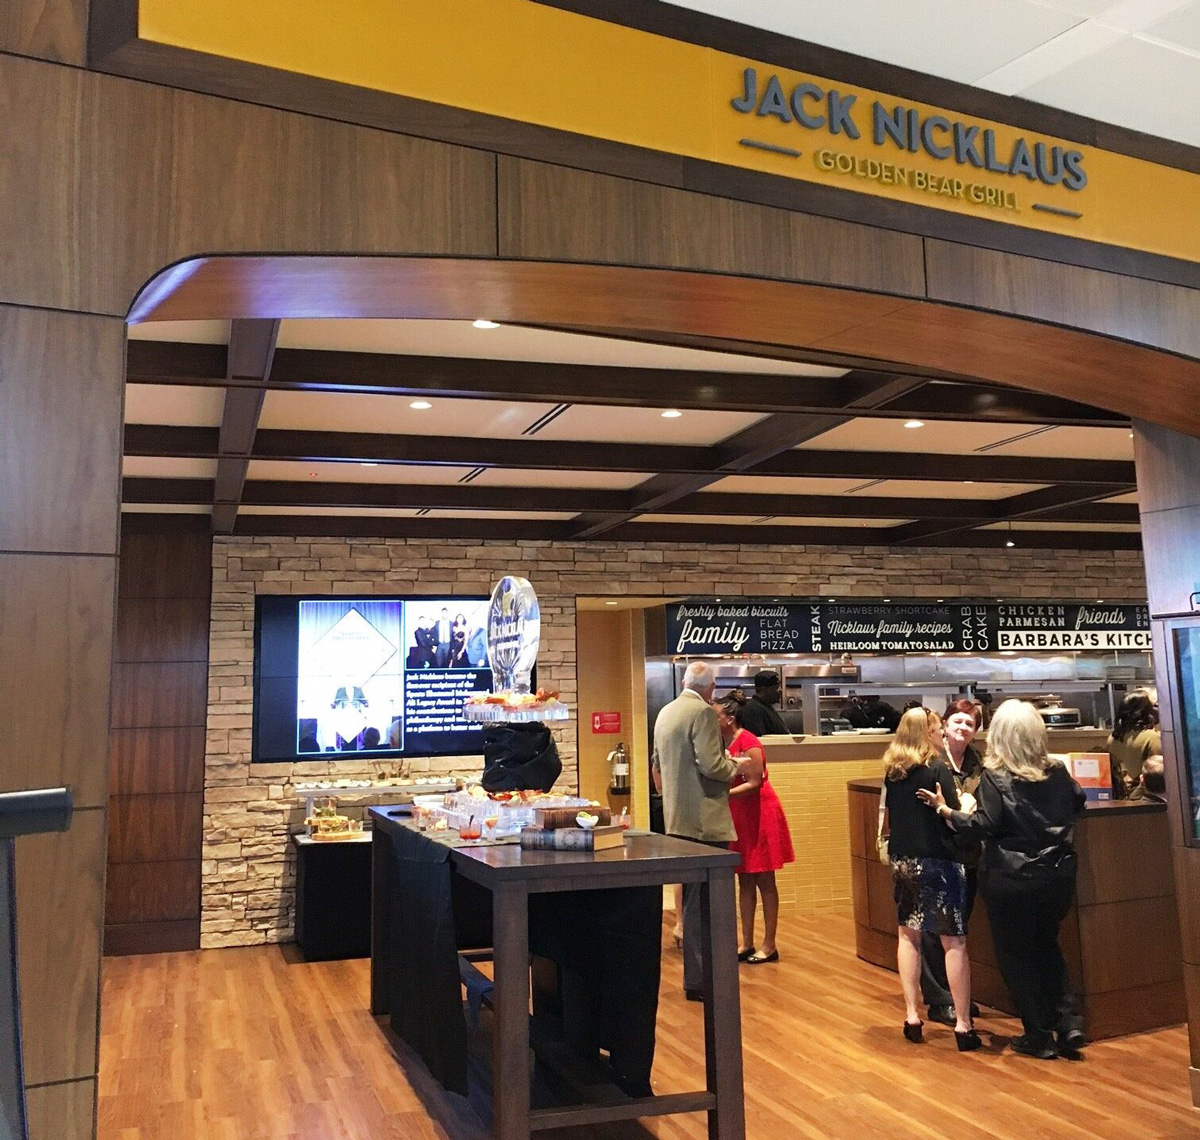 Jack Nicklaus Golden Bear Grill at Charleston International Airport